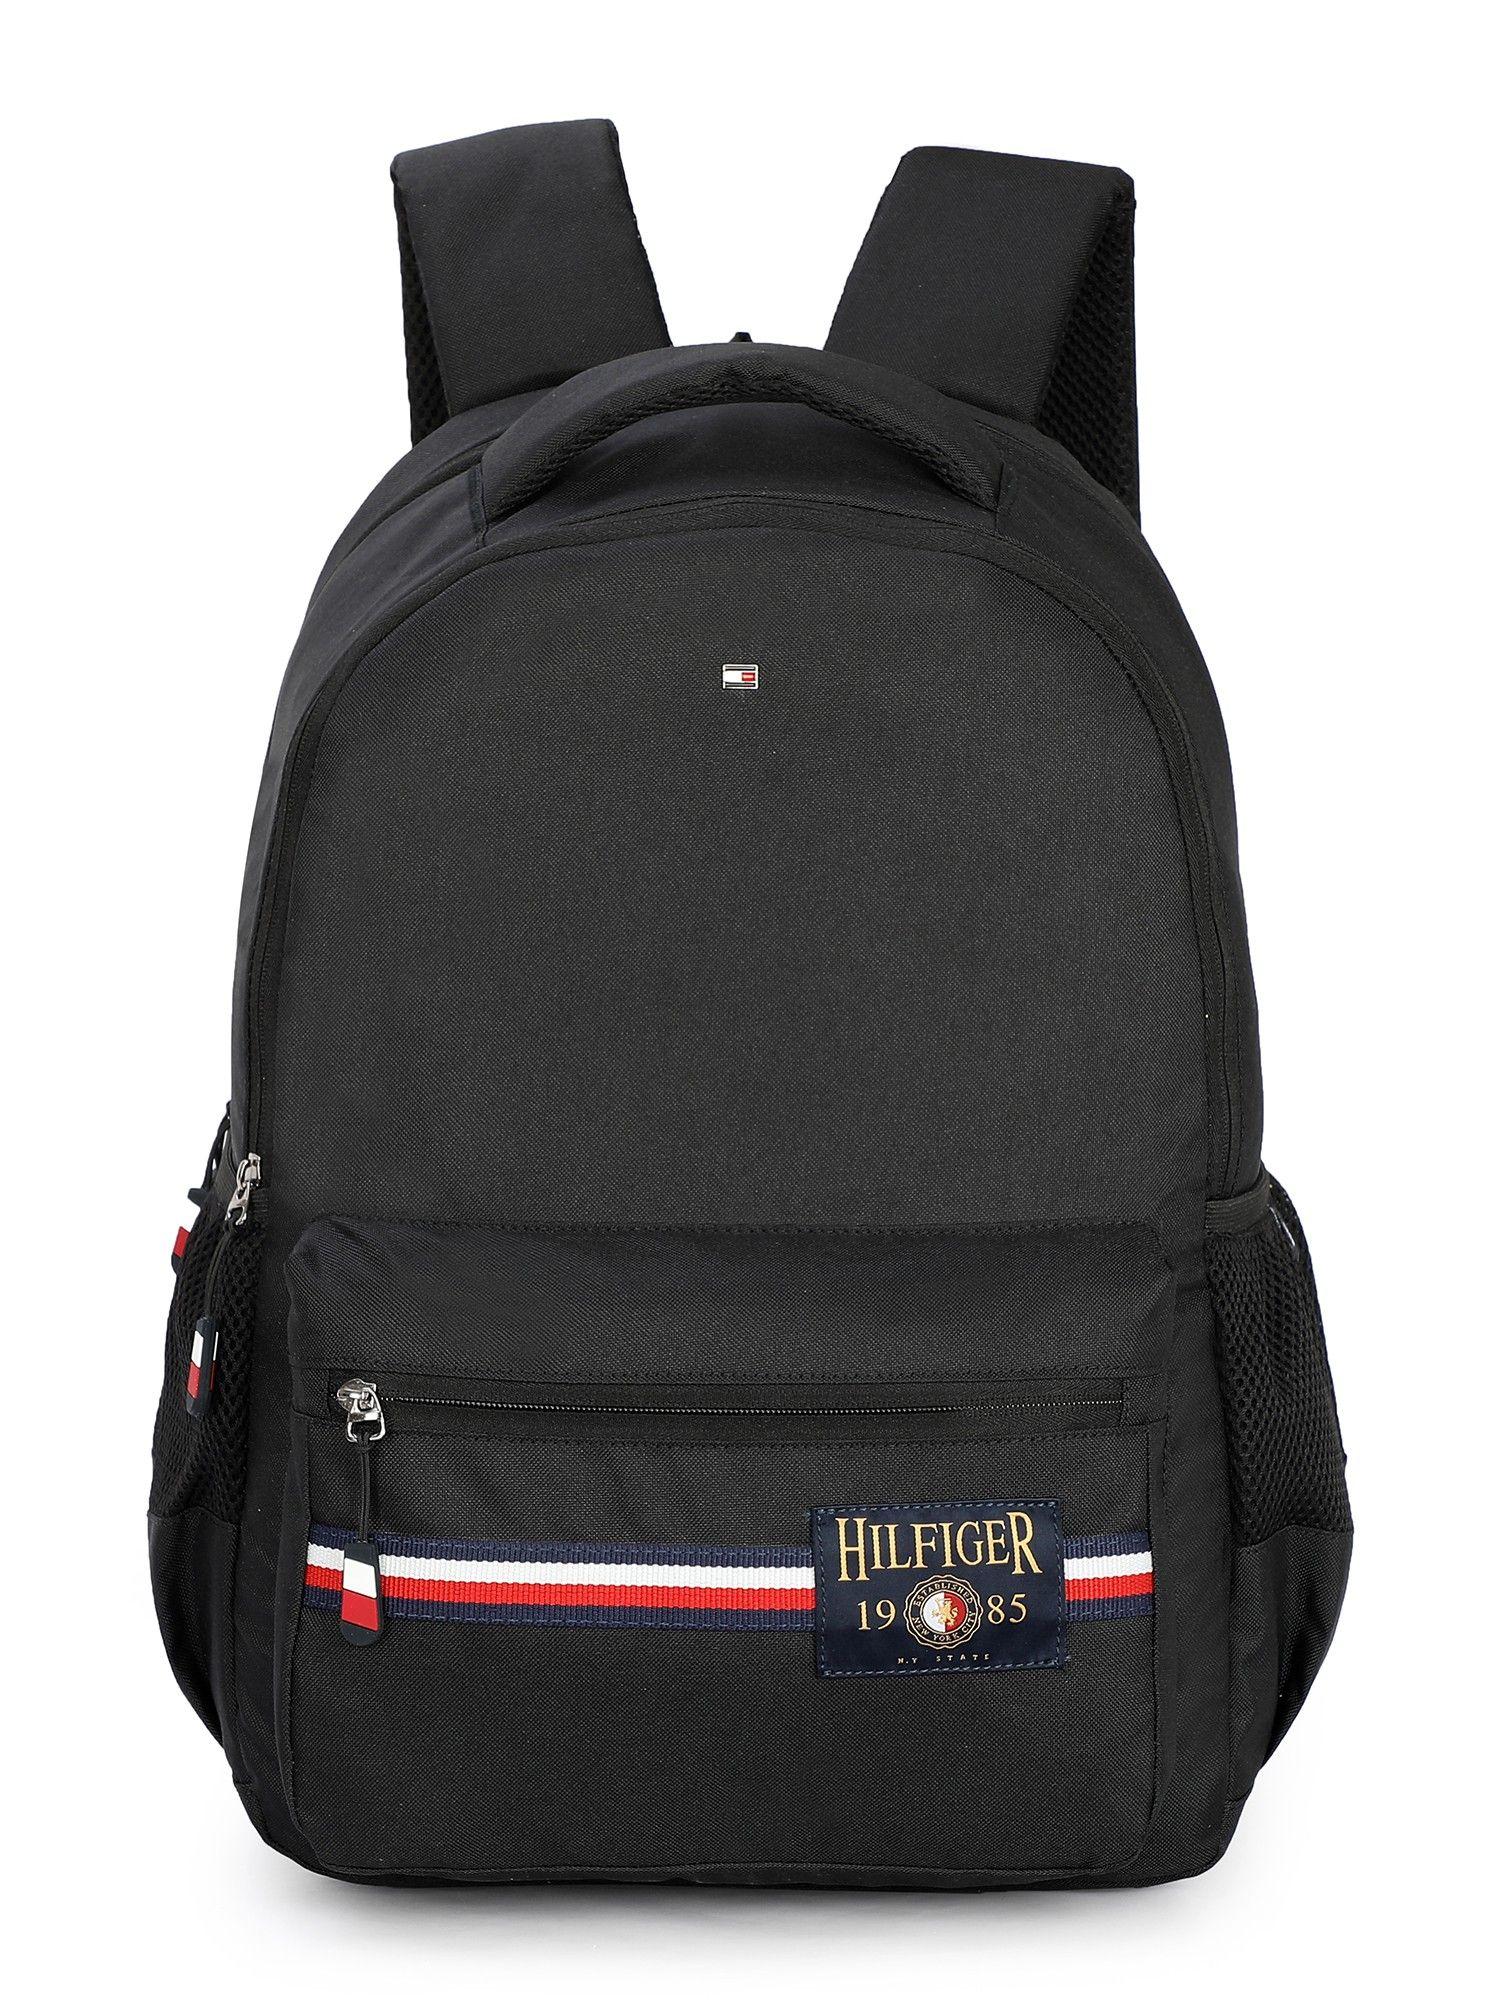 matias unisex laptop backpack solid 14 inch black